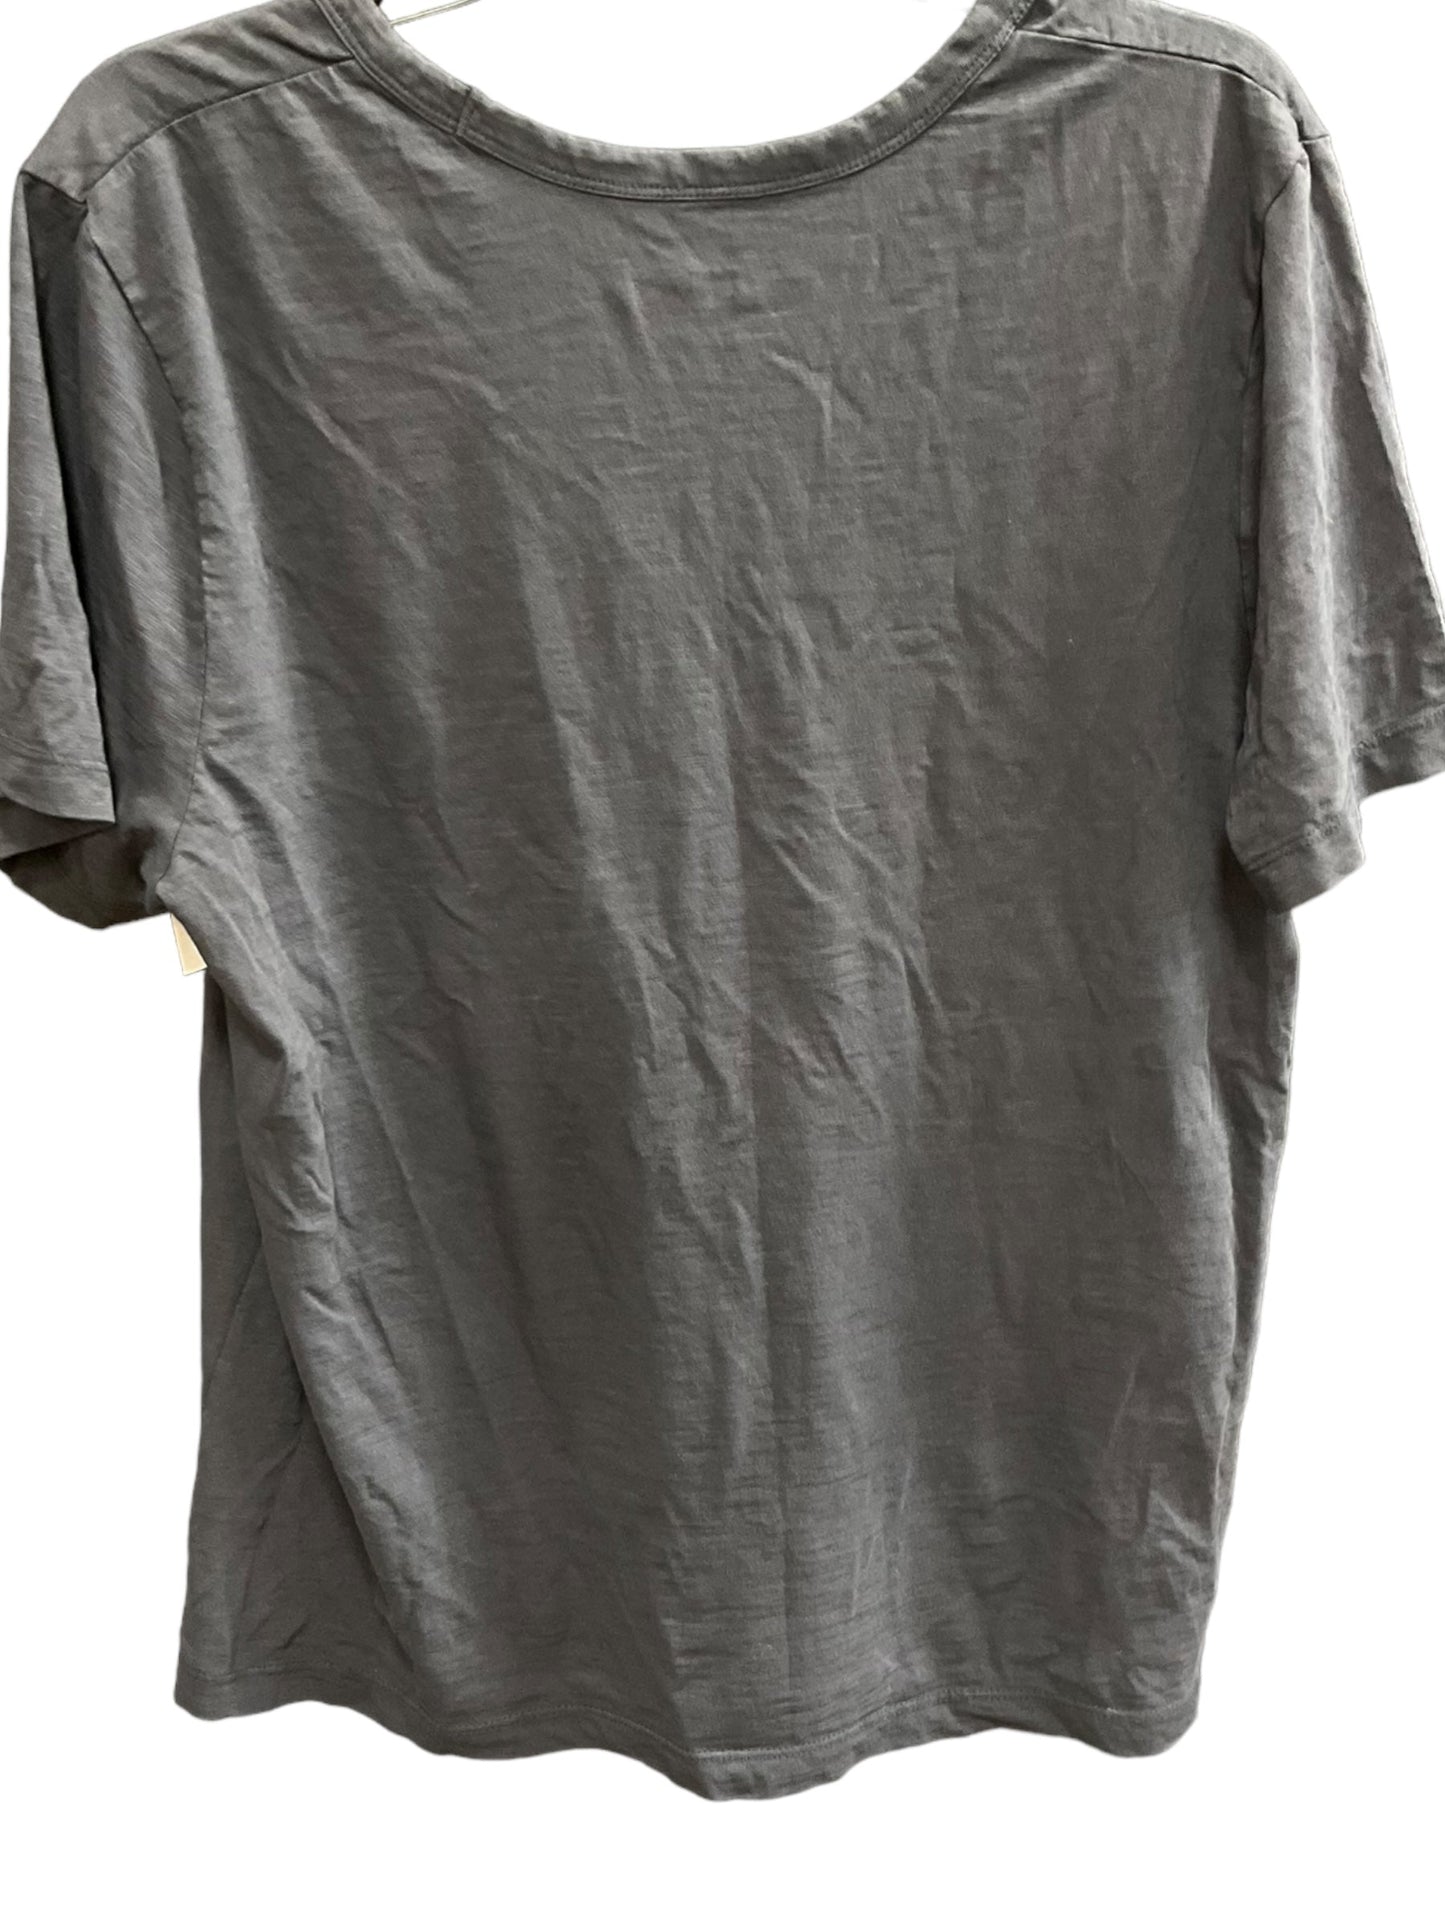 Grey Top Short Sleeve Basic Universal Thread, Size Xl